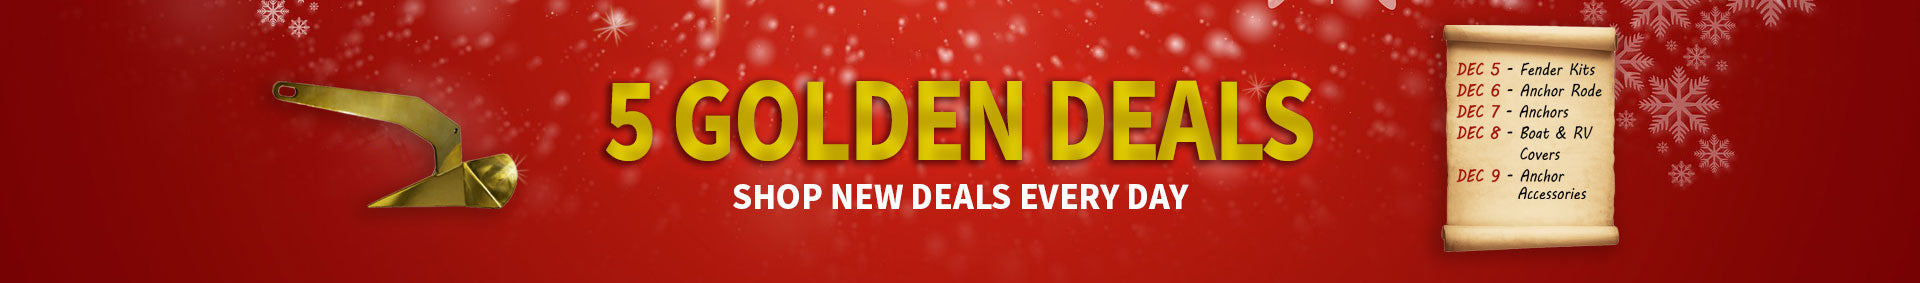 5 Golden Deals - Ribbed Fender Kits